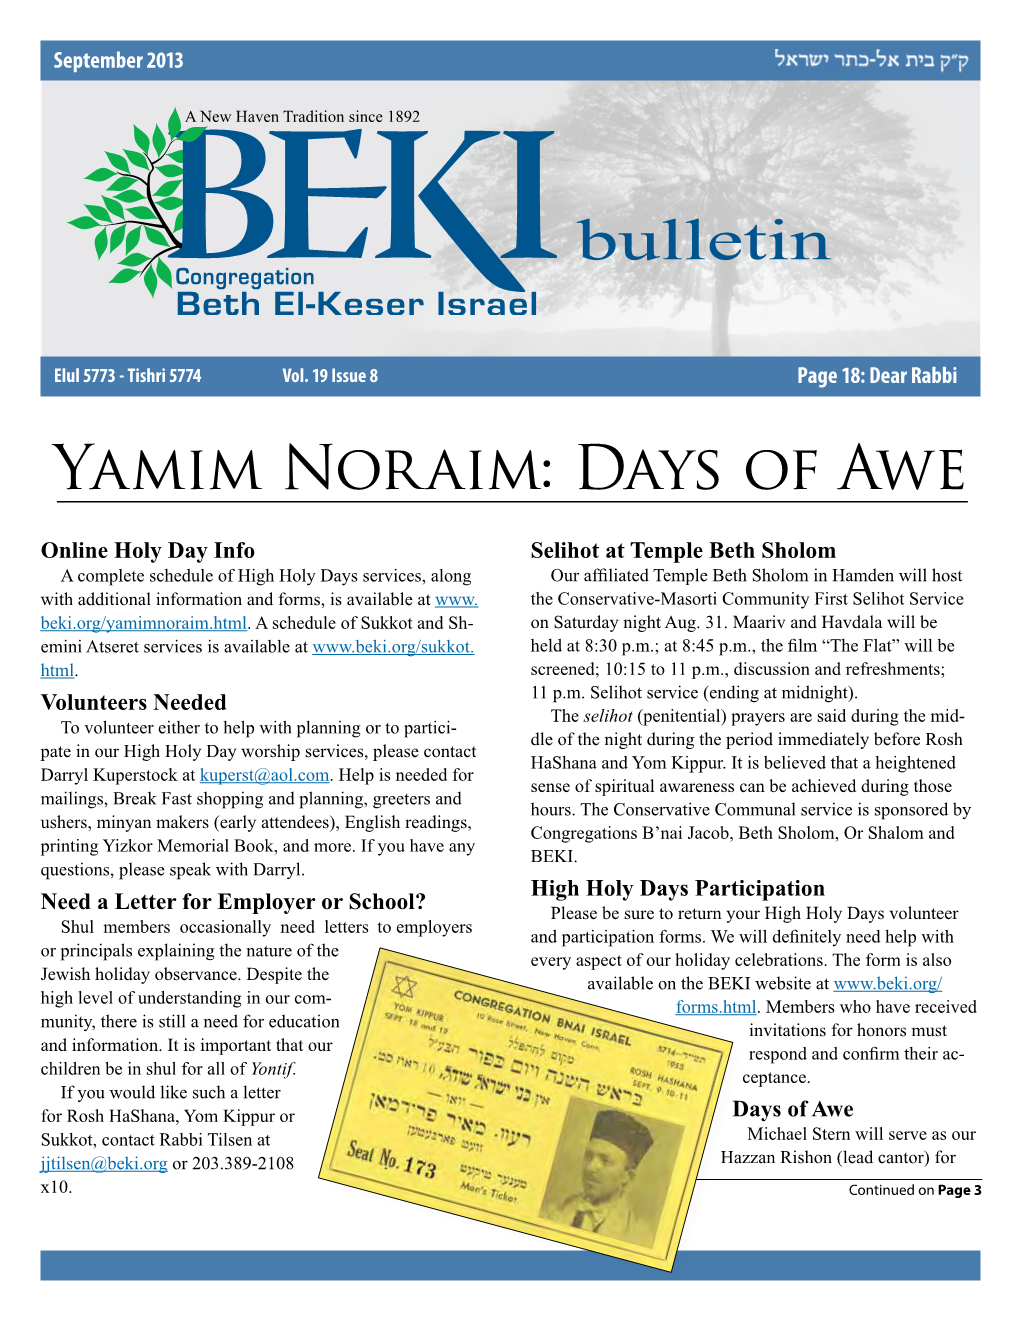 Yamim Noraim: Days of Awe